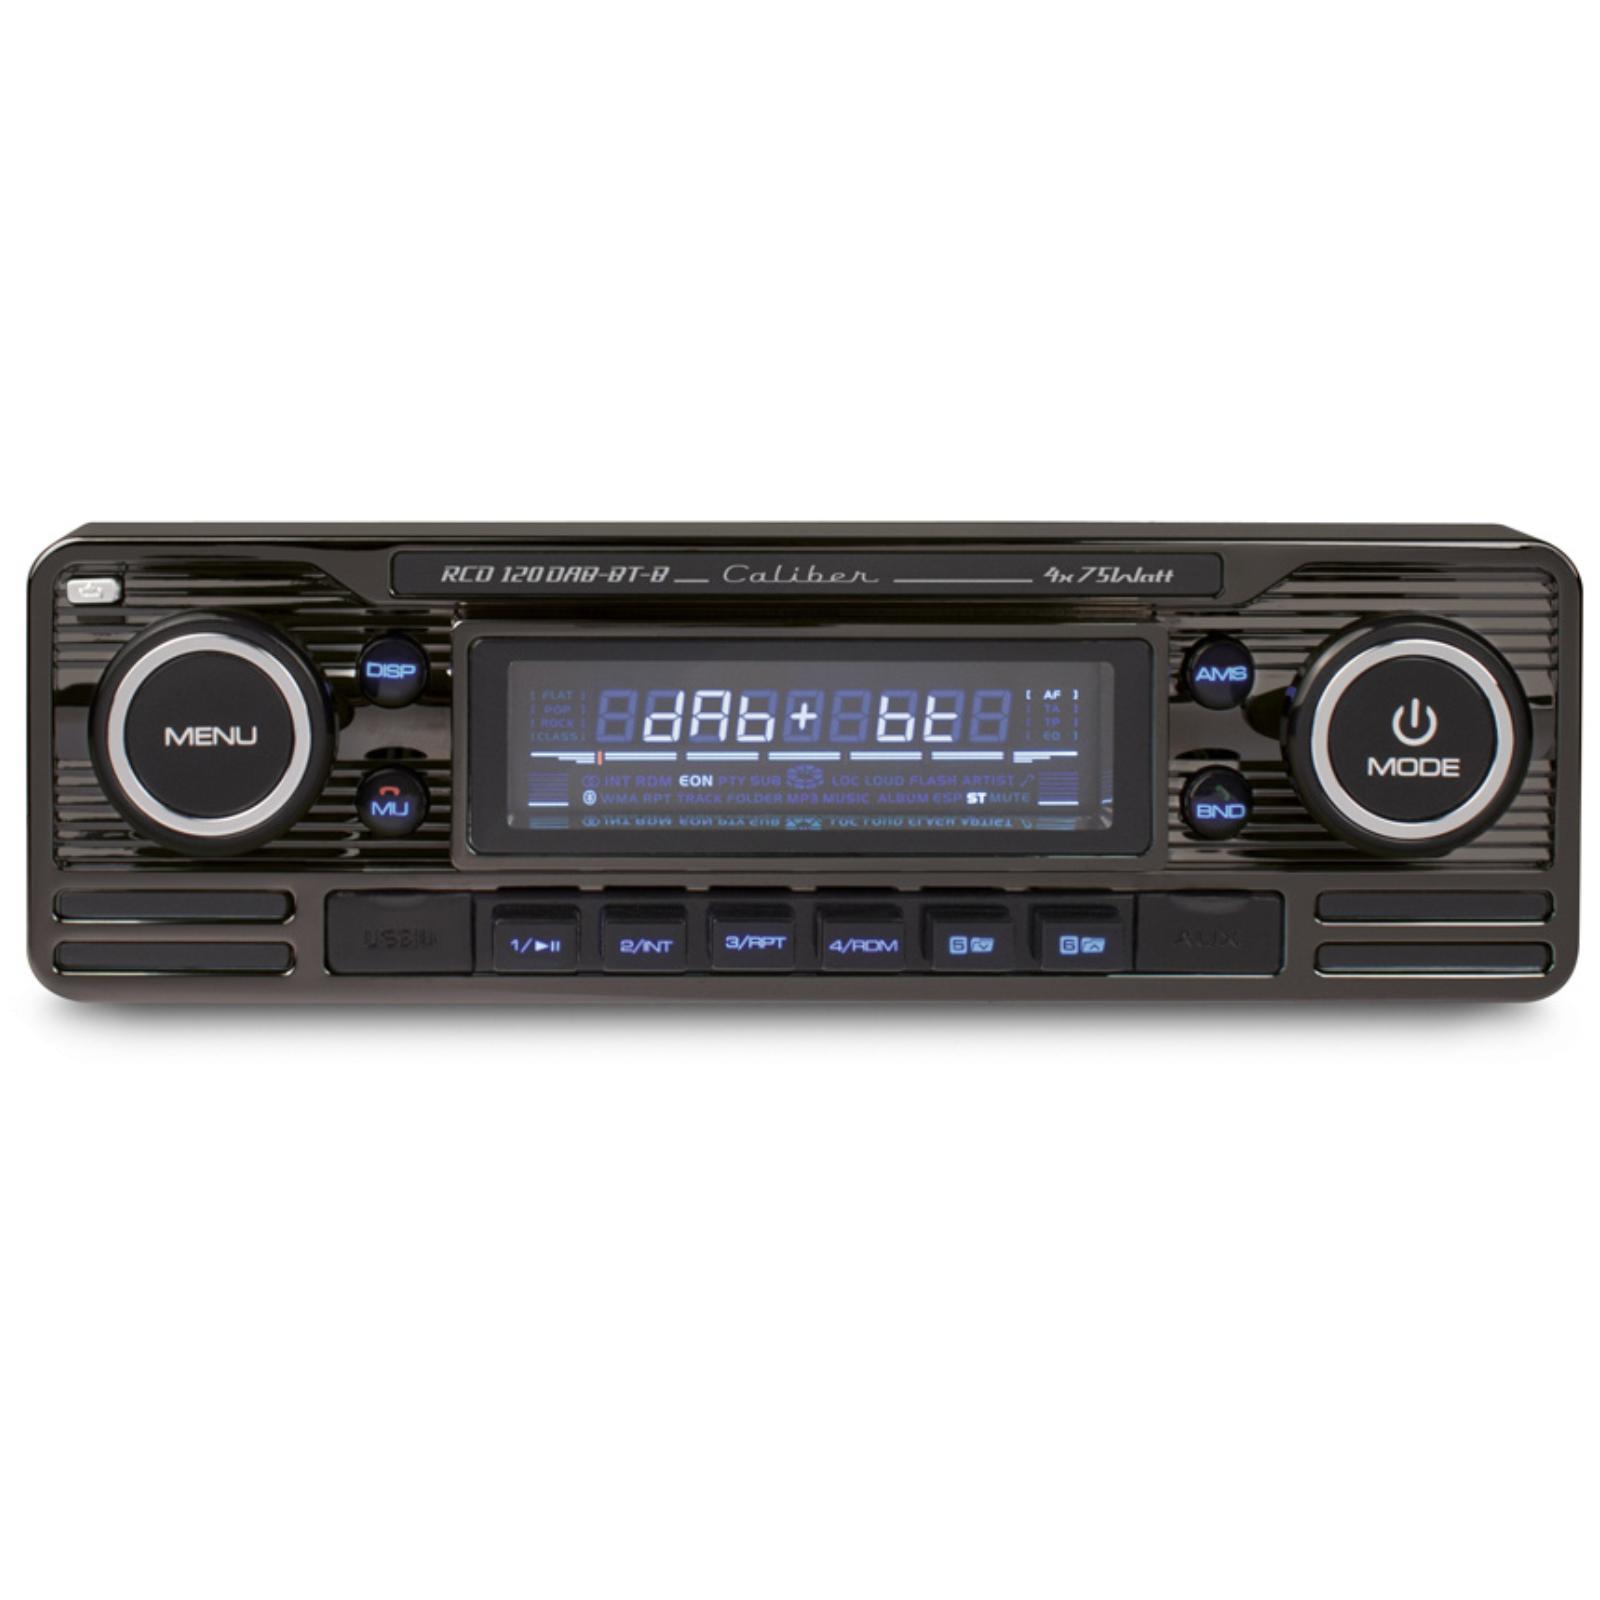 Blaupunkt Dubai 324 DAB BT 24v radio with DAB Bluetooth CD player